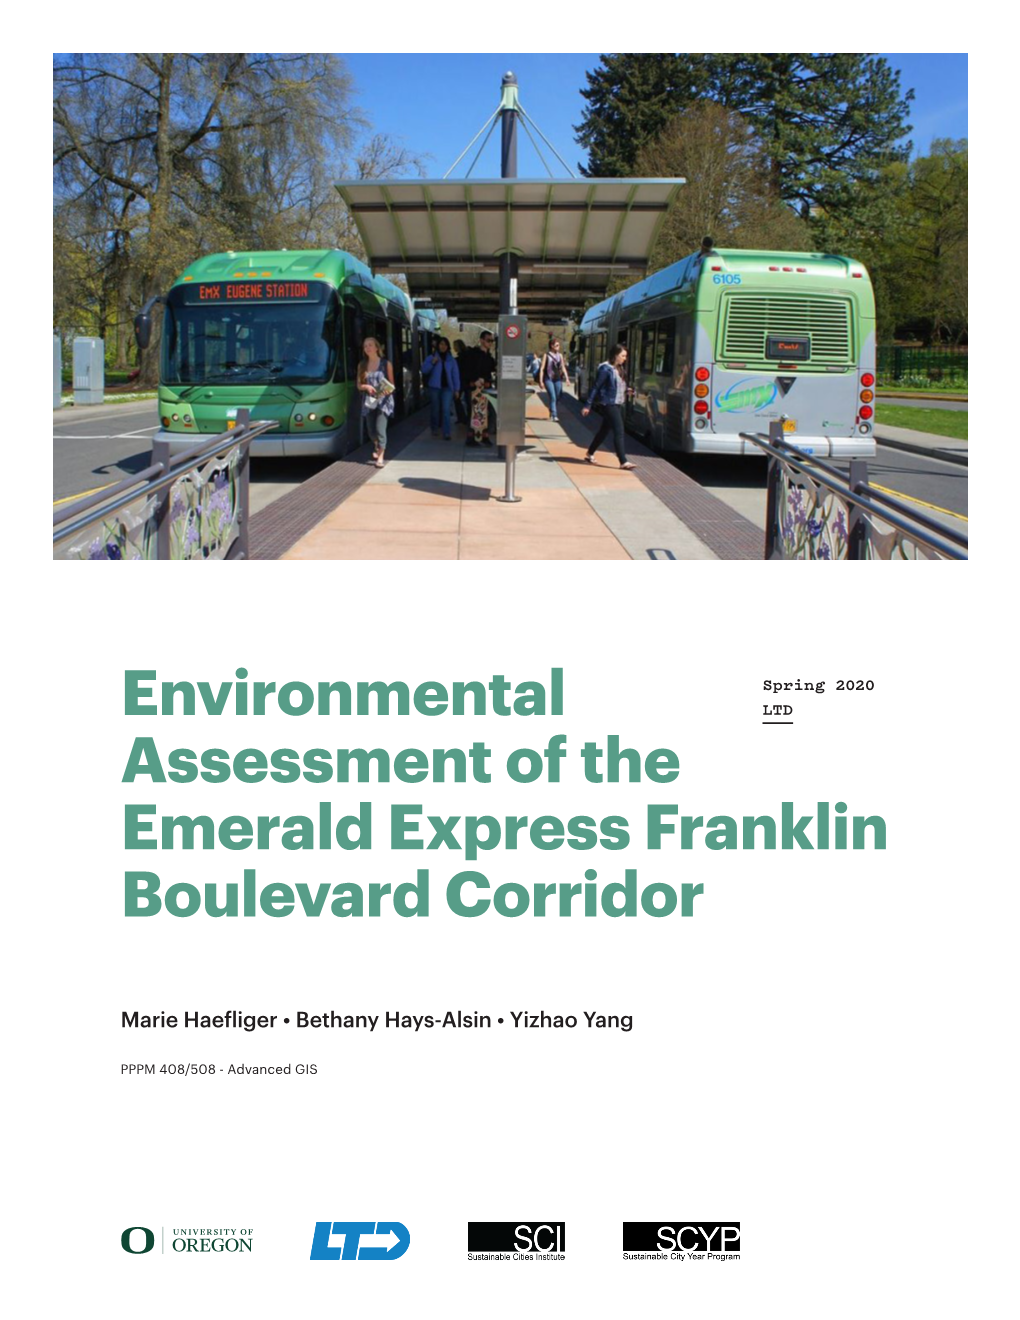 Environmental Assessment of the Emerald Express Franklin Boulevard Corridor